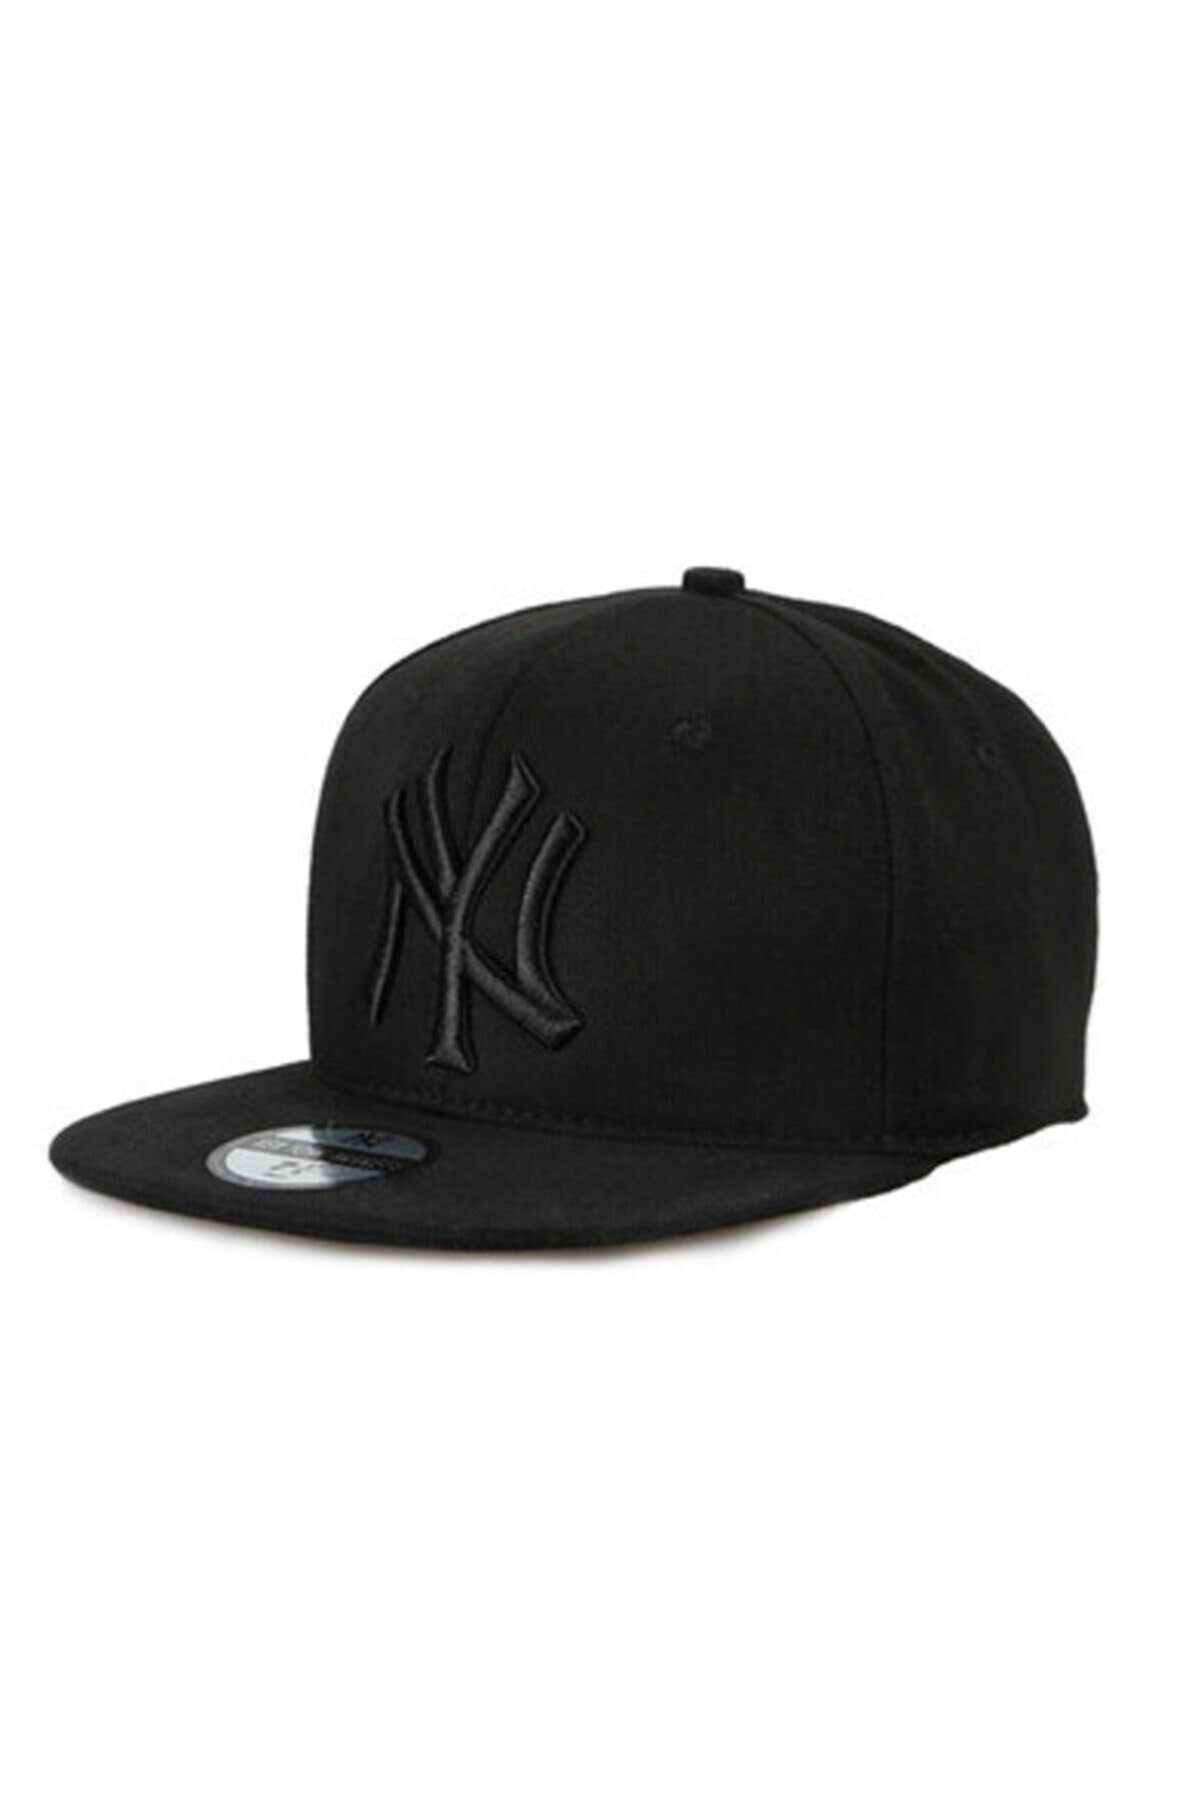 CosmoOutlet Ny New York Logolu Snapback Hip Hop Unisex Siyah Şapka